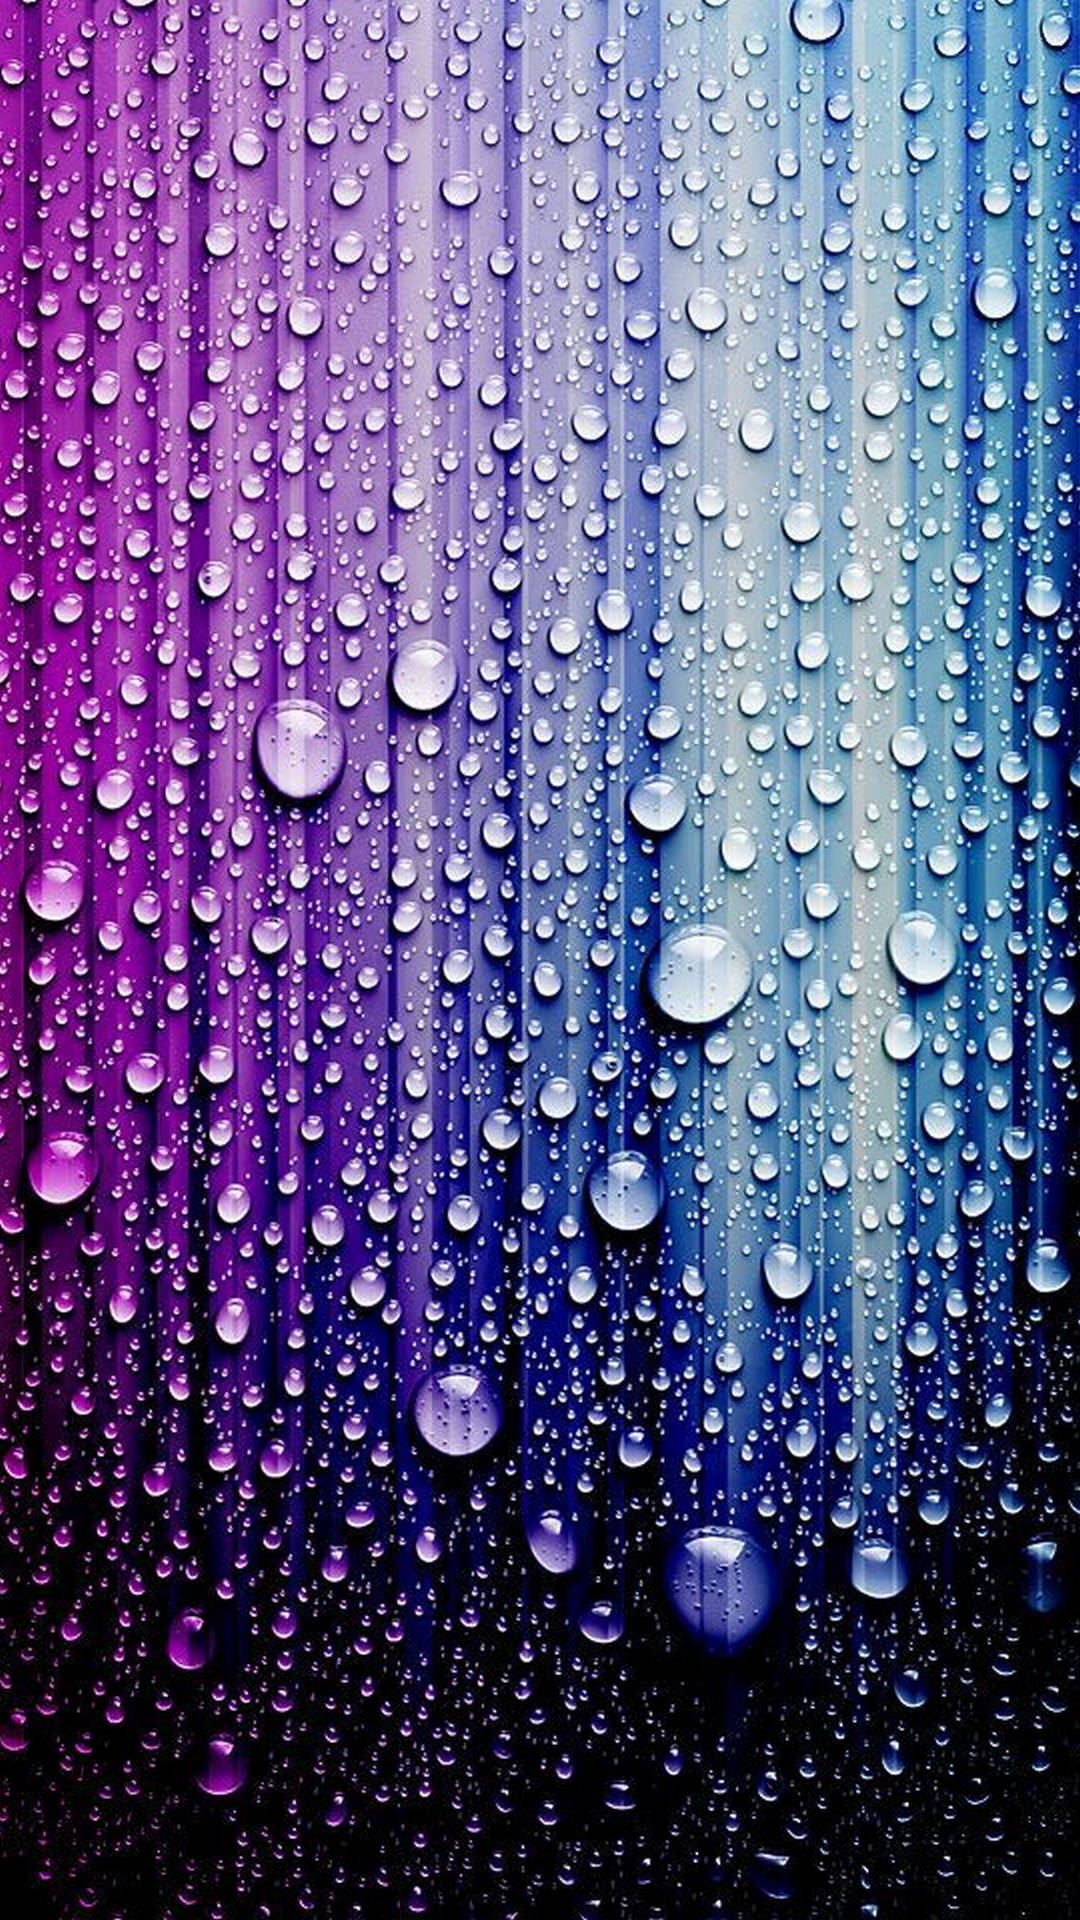 Aggregate 80+ raindrop wallpaper